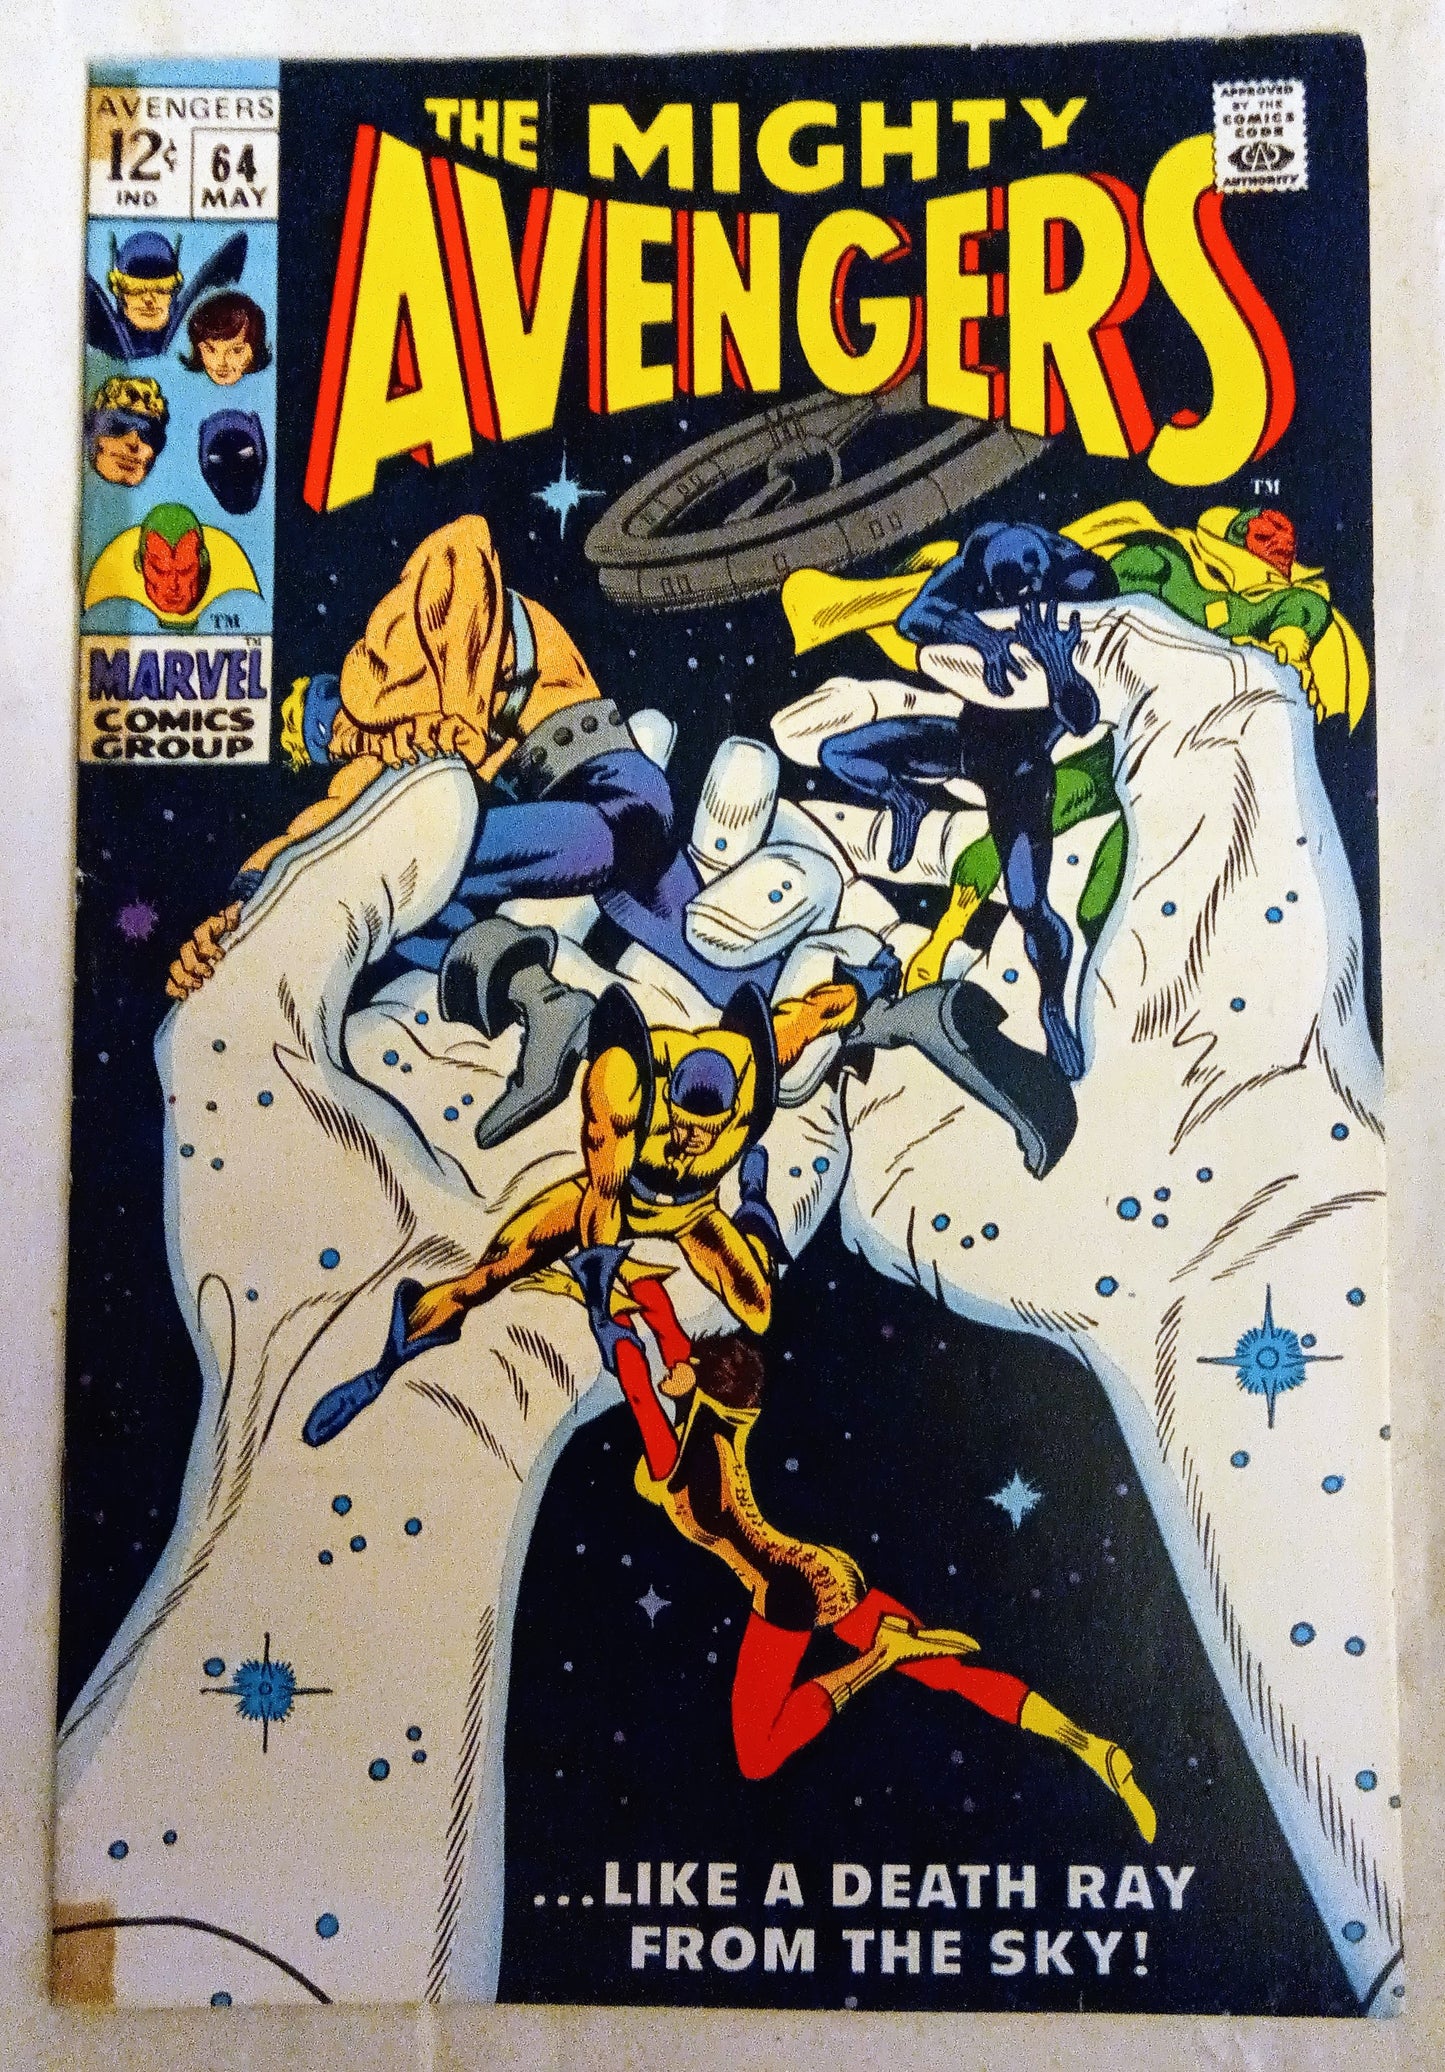 Avengers #064, Marvel Comics (May 1969)